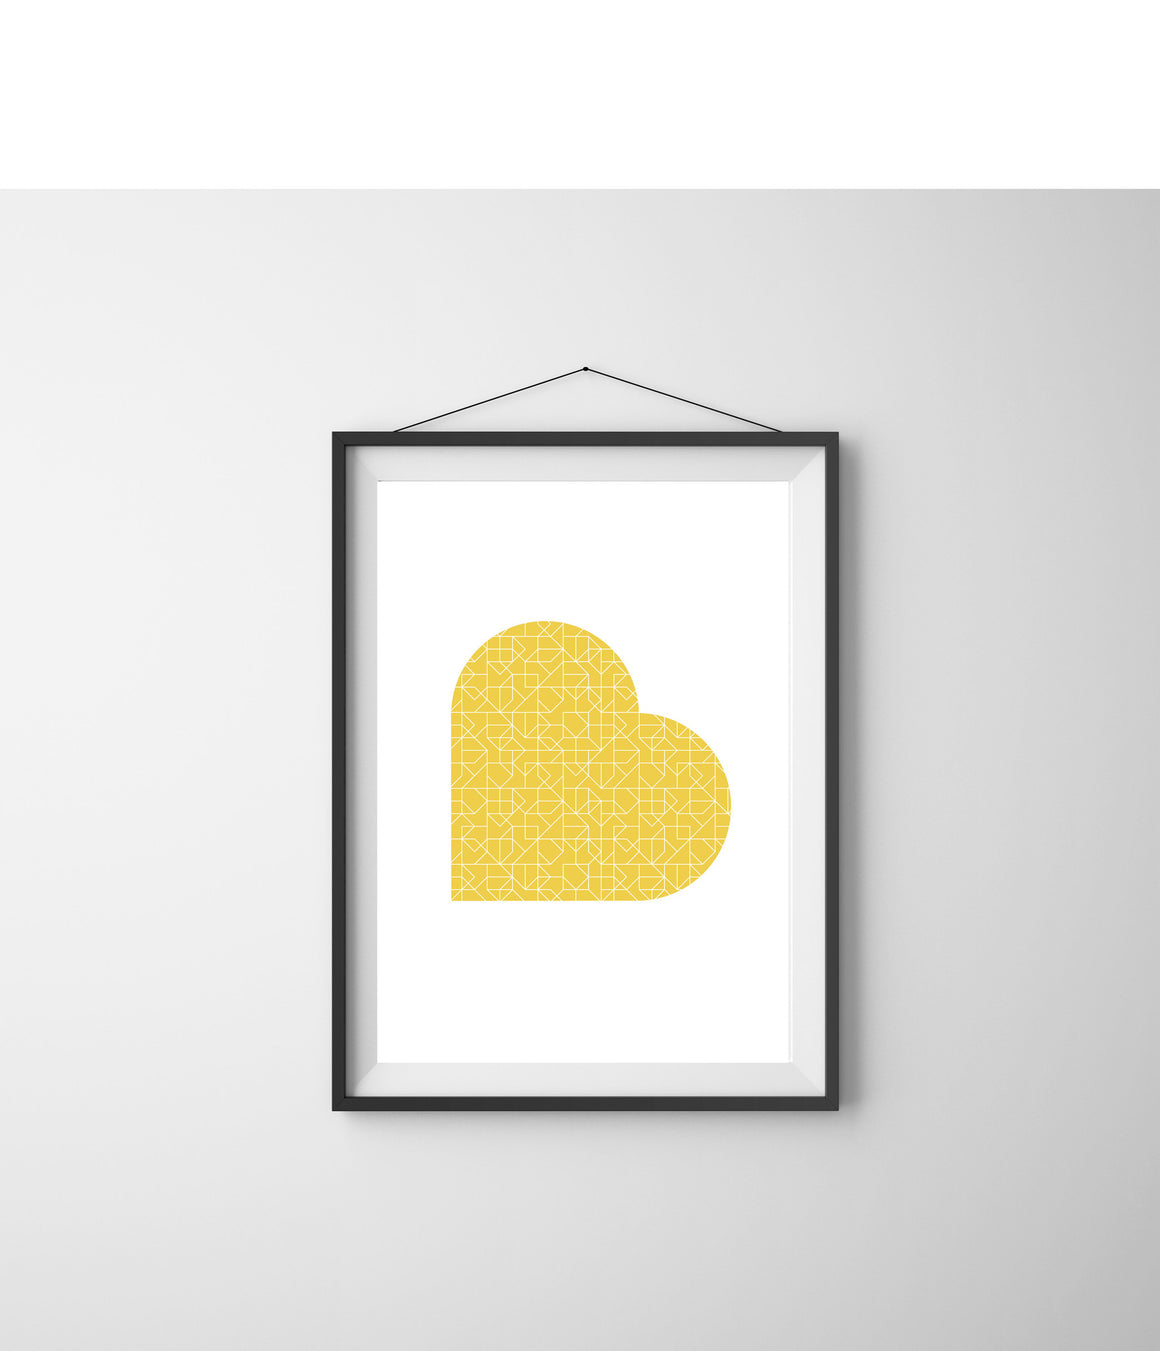 Yellow Love Print by Anarkid (Display Stock)